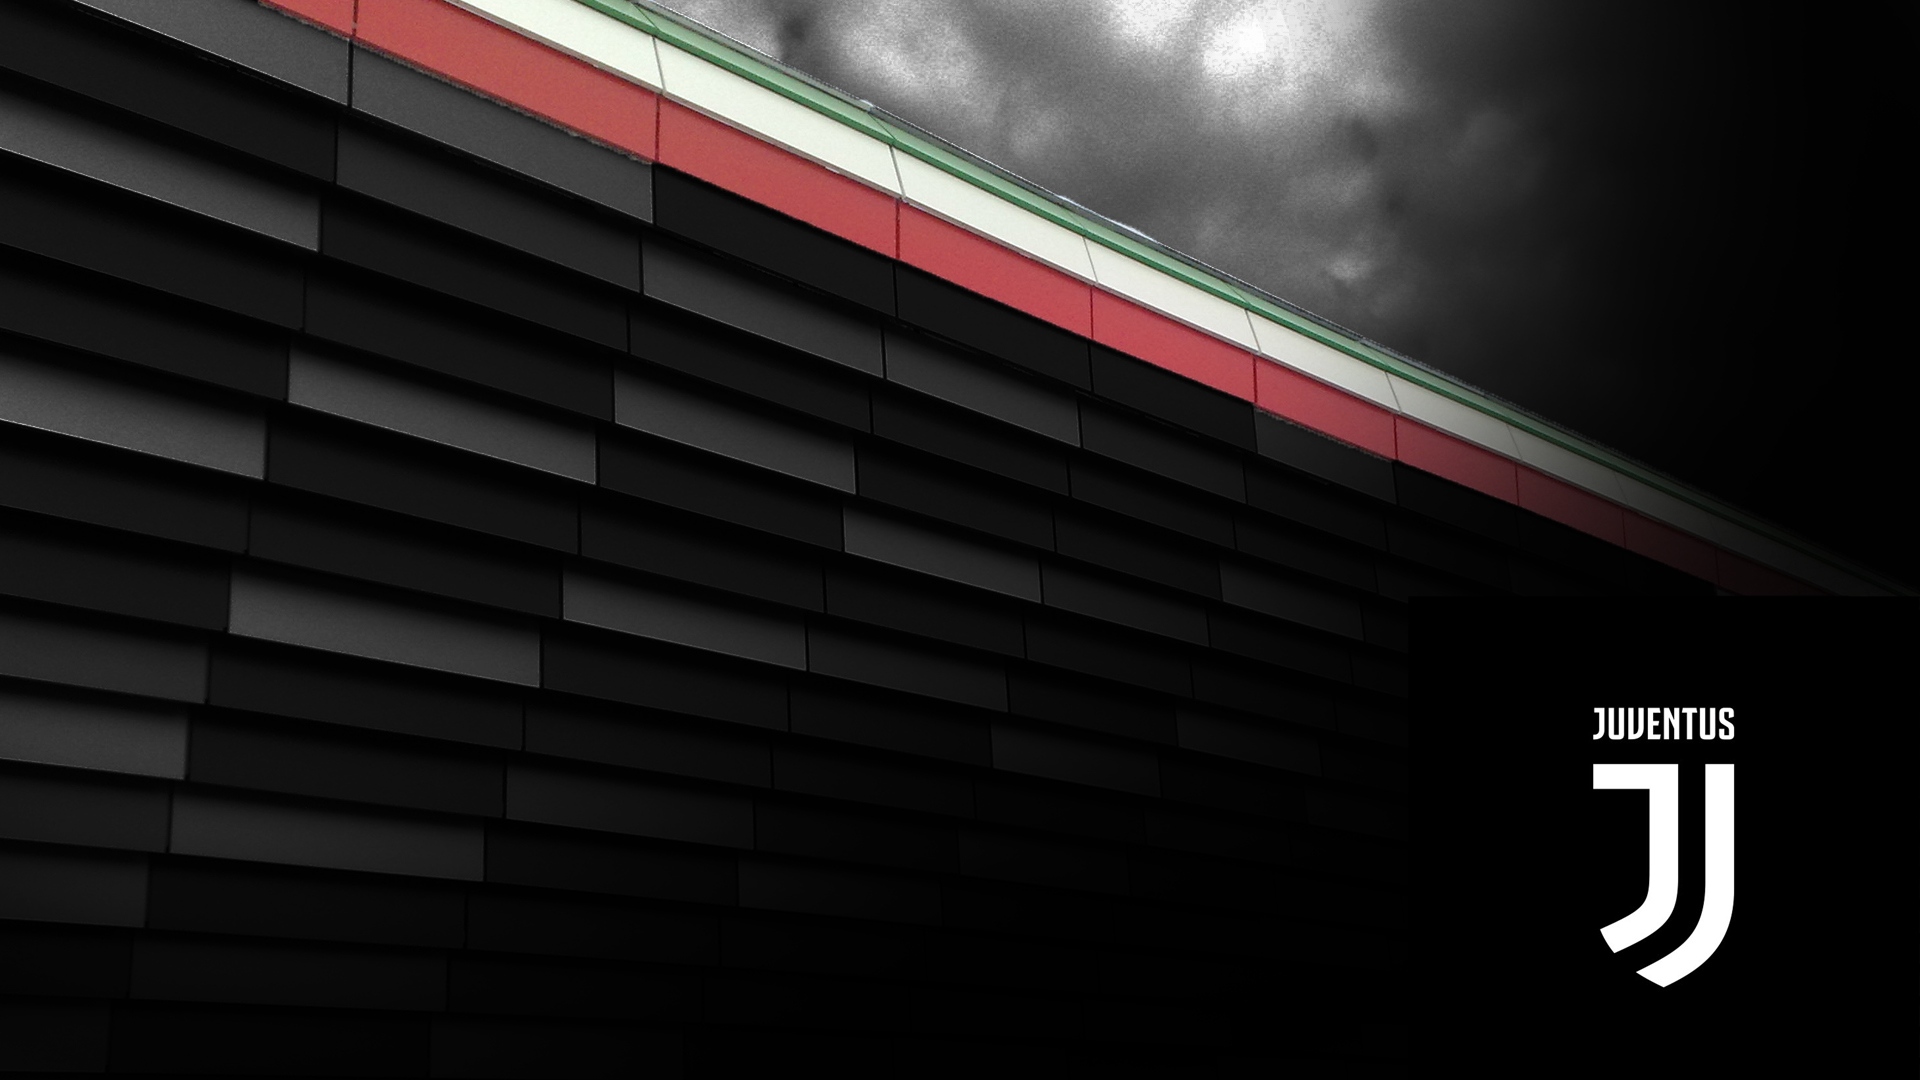  Juventus  Juve  Wallpapers  HD  Desktop and Mobile Backgrounds 